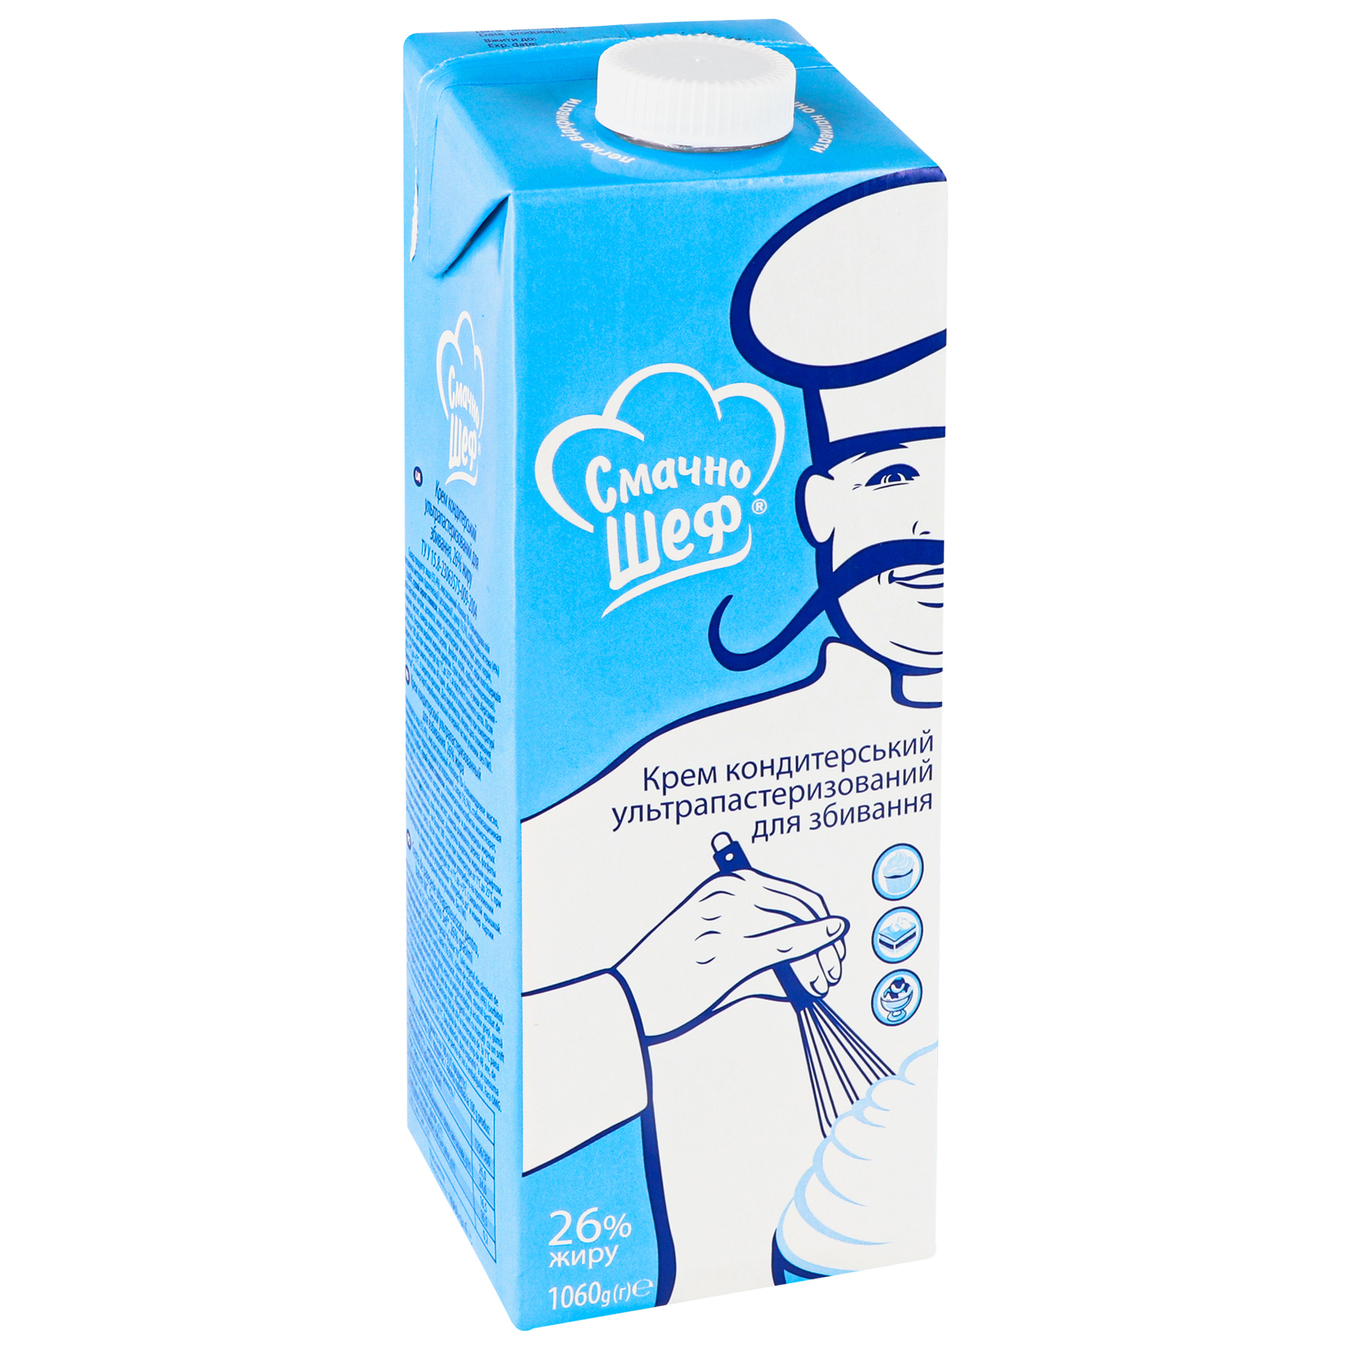 Cream Smachno Shef Сonfectionery UltraPasteurized 26% 1060g 2